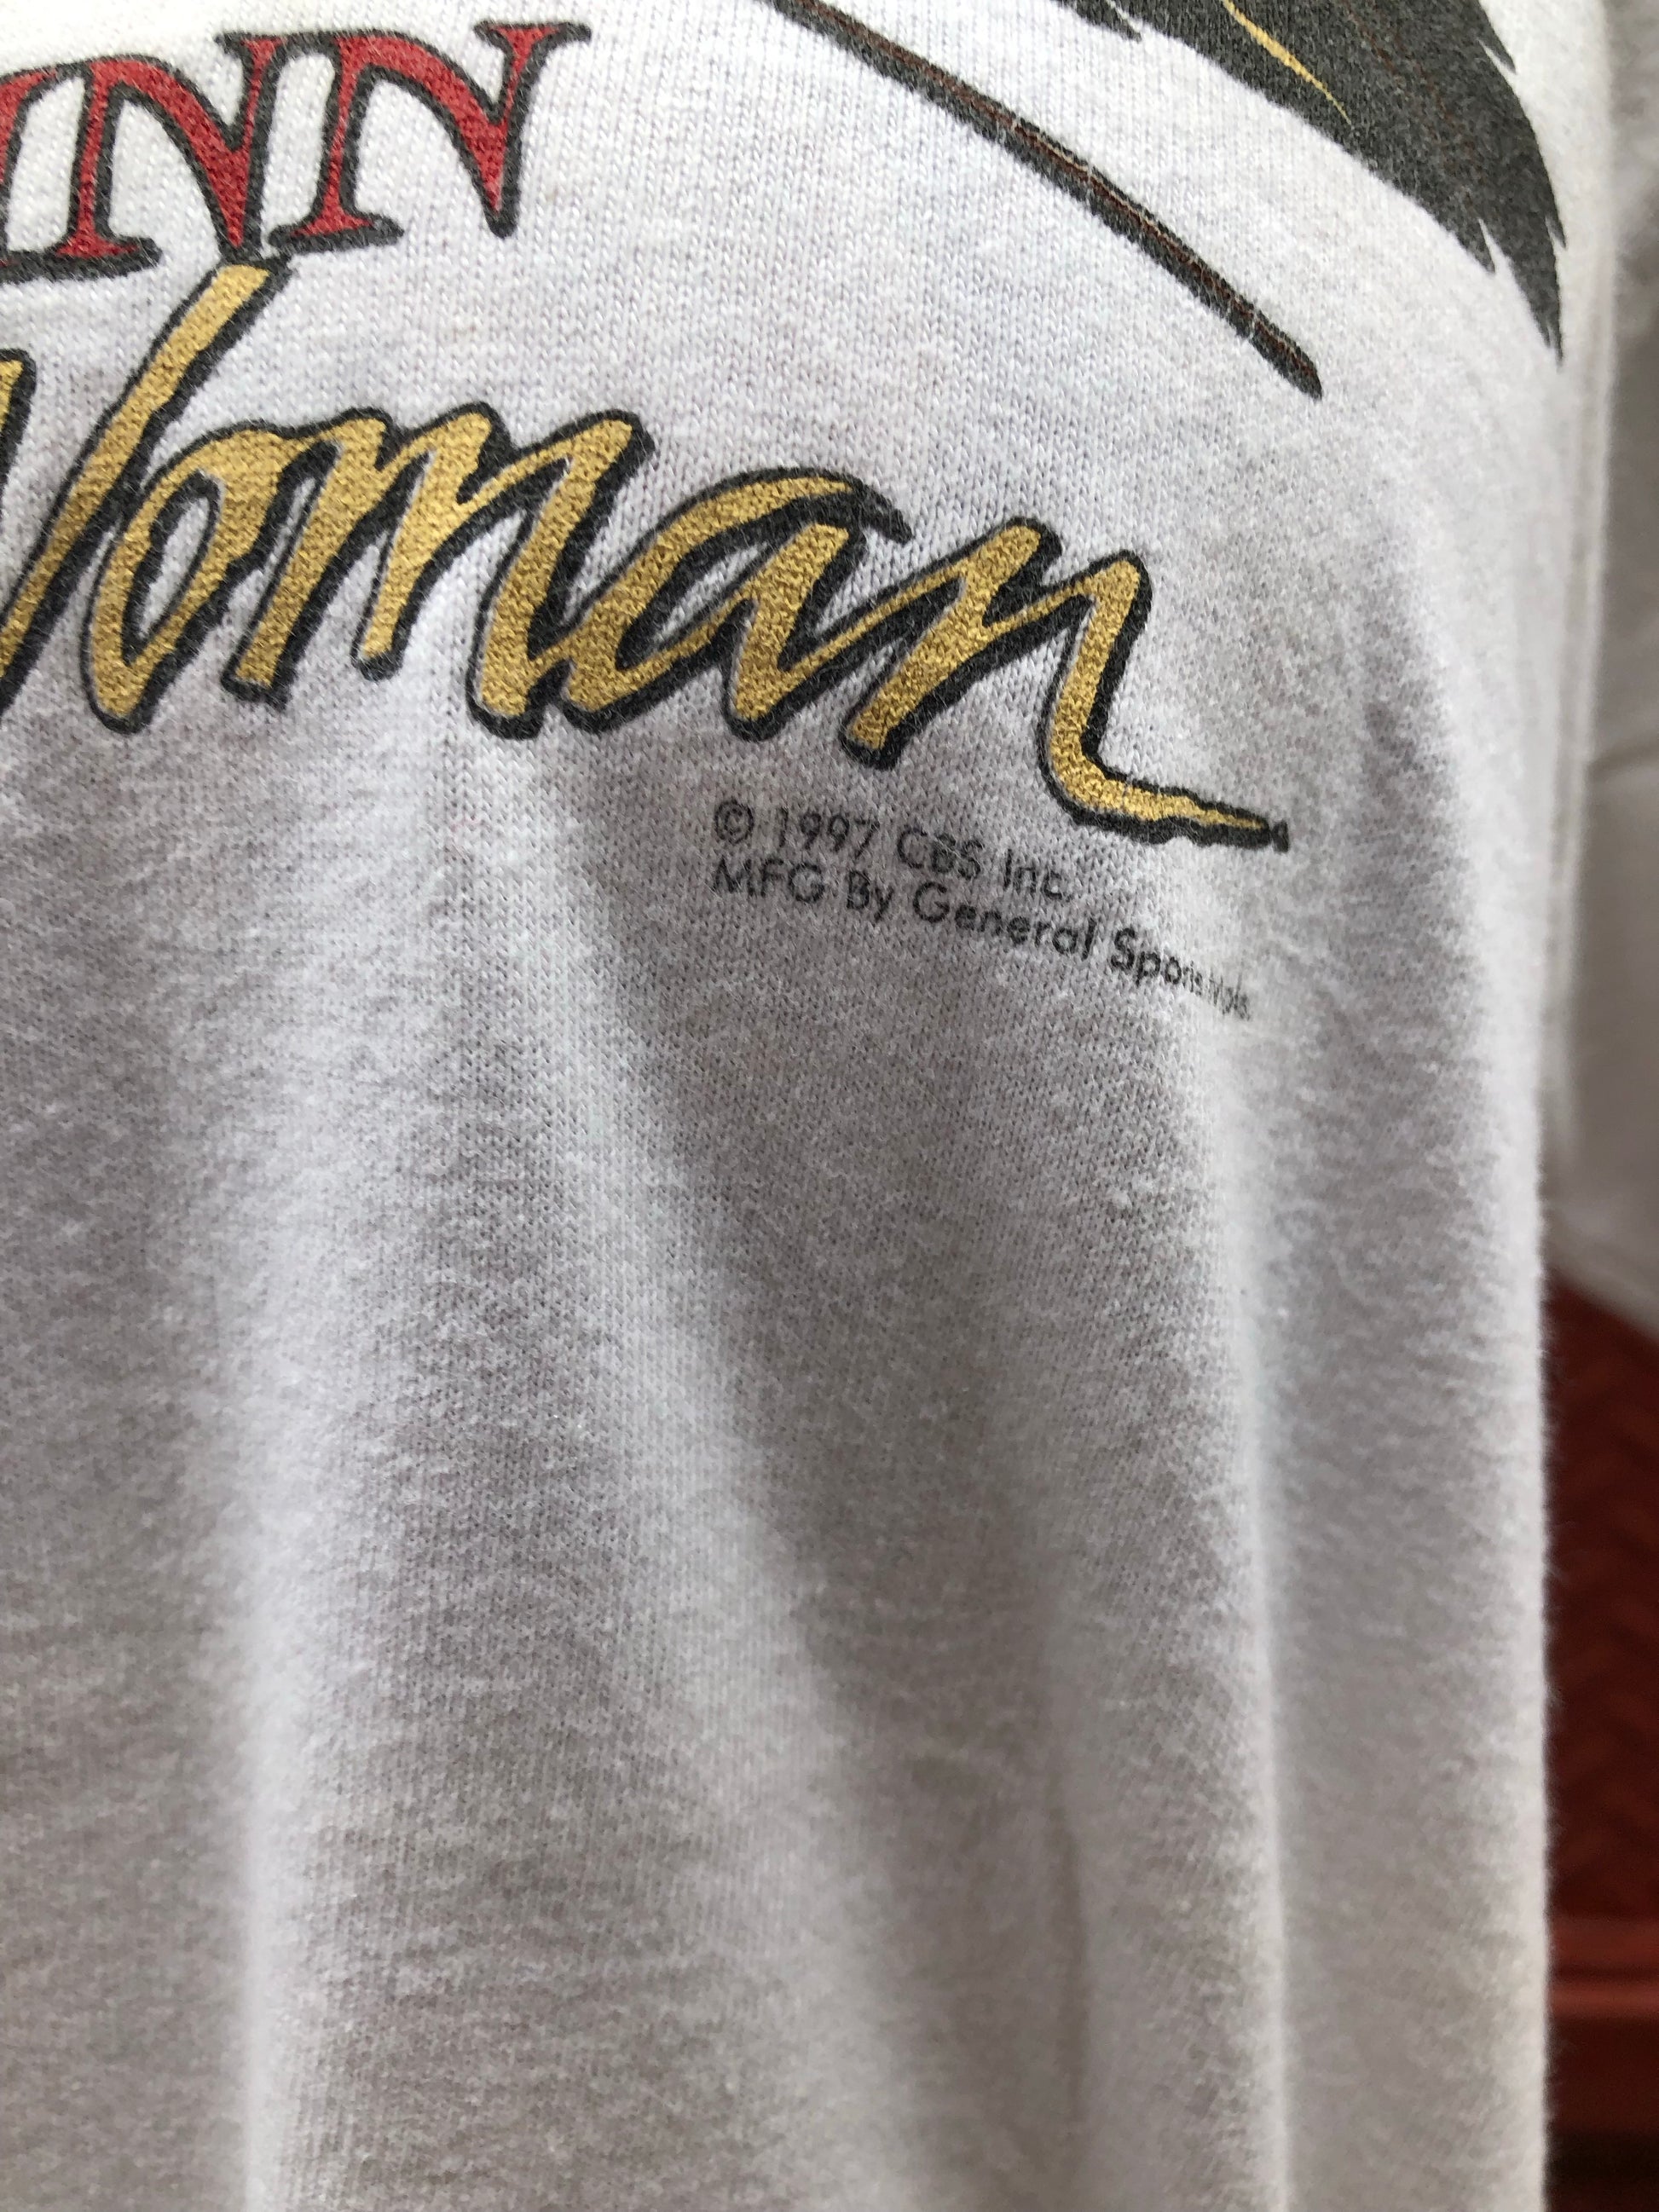 Vintage 1997 Dr Quinn Medicine Woman T-shirt - Spark Pretty